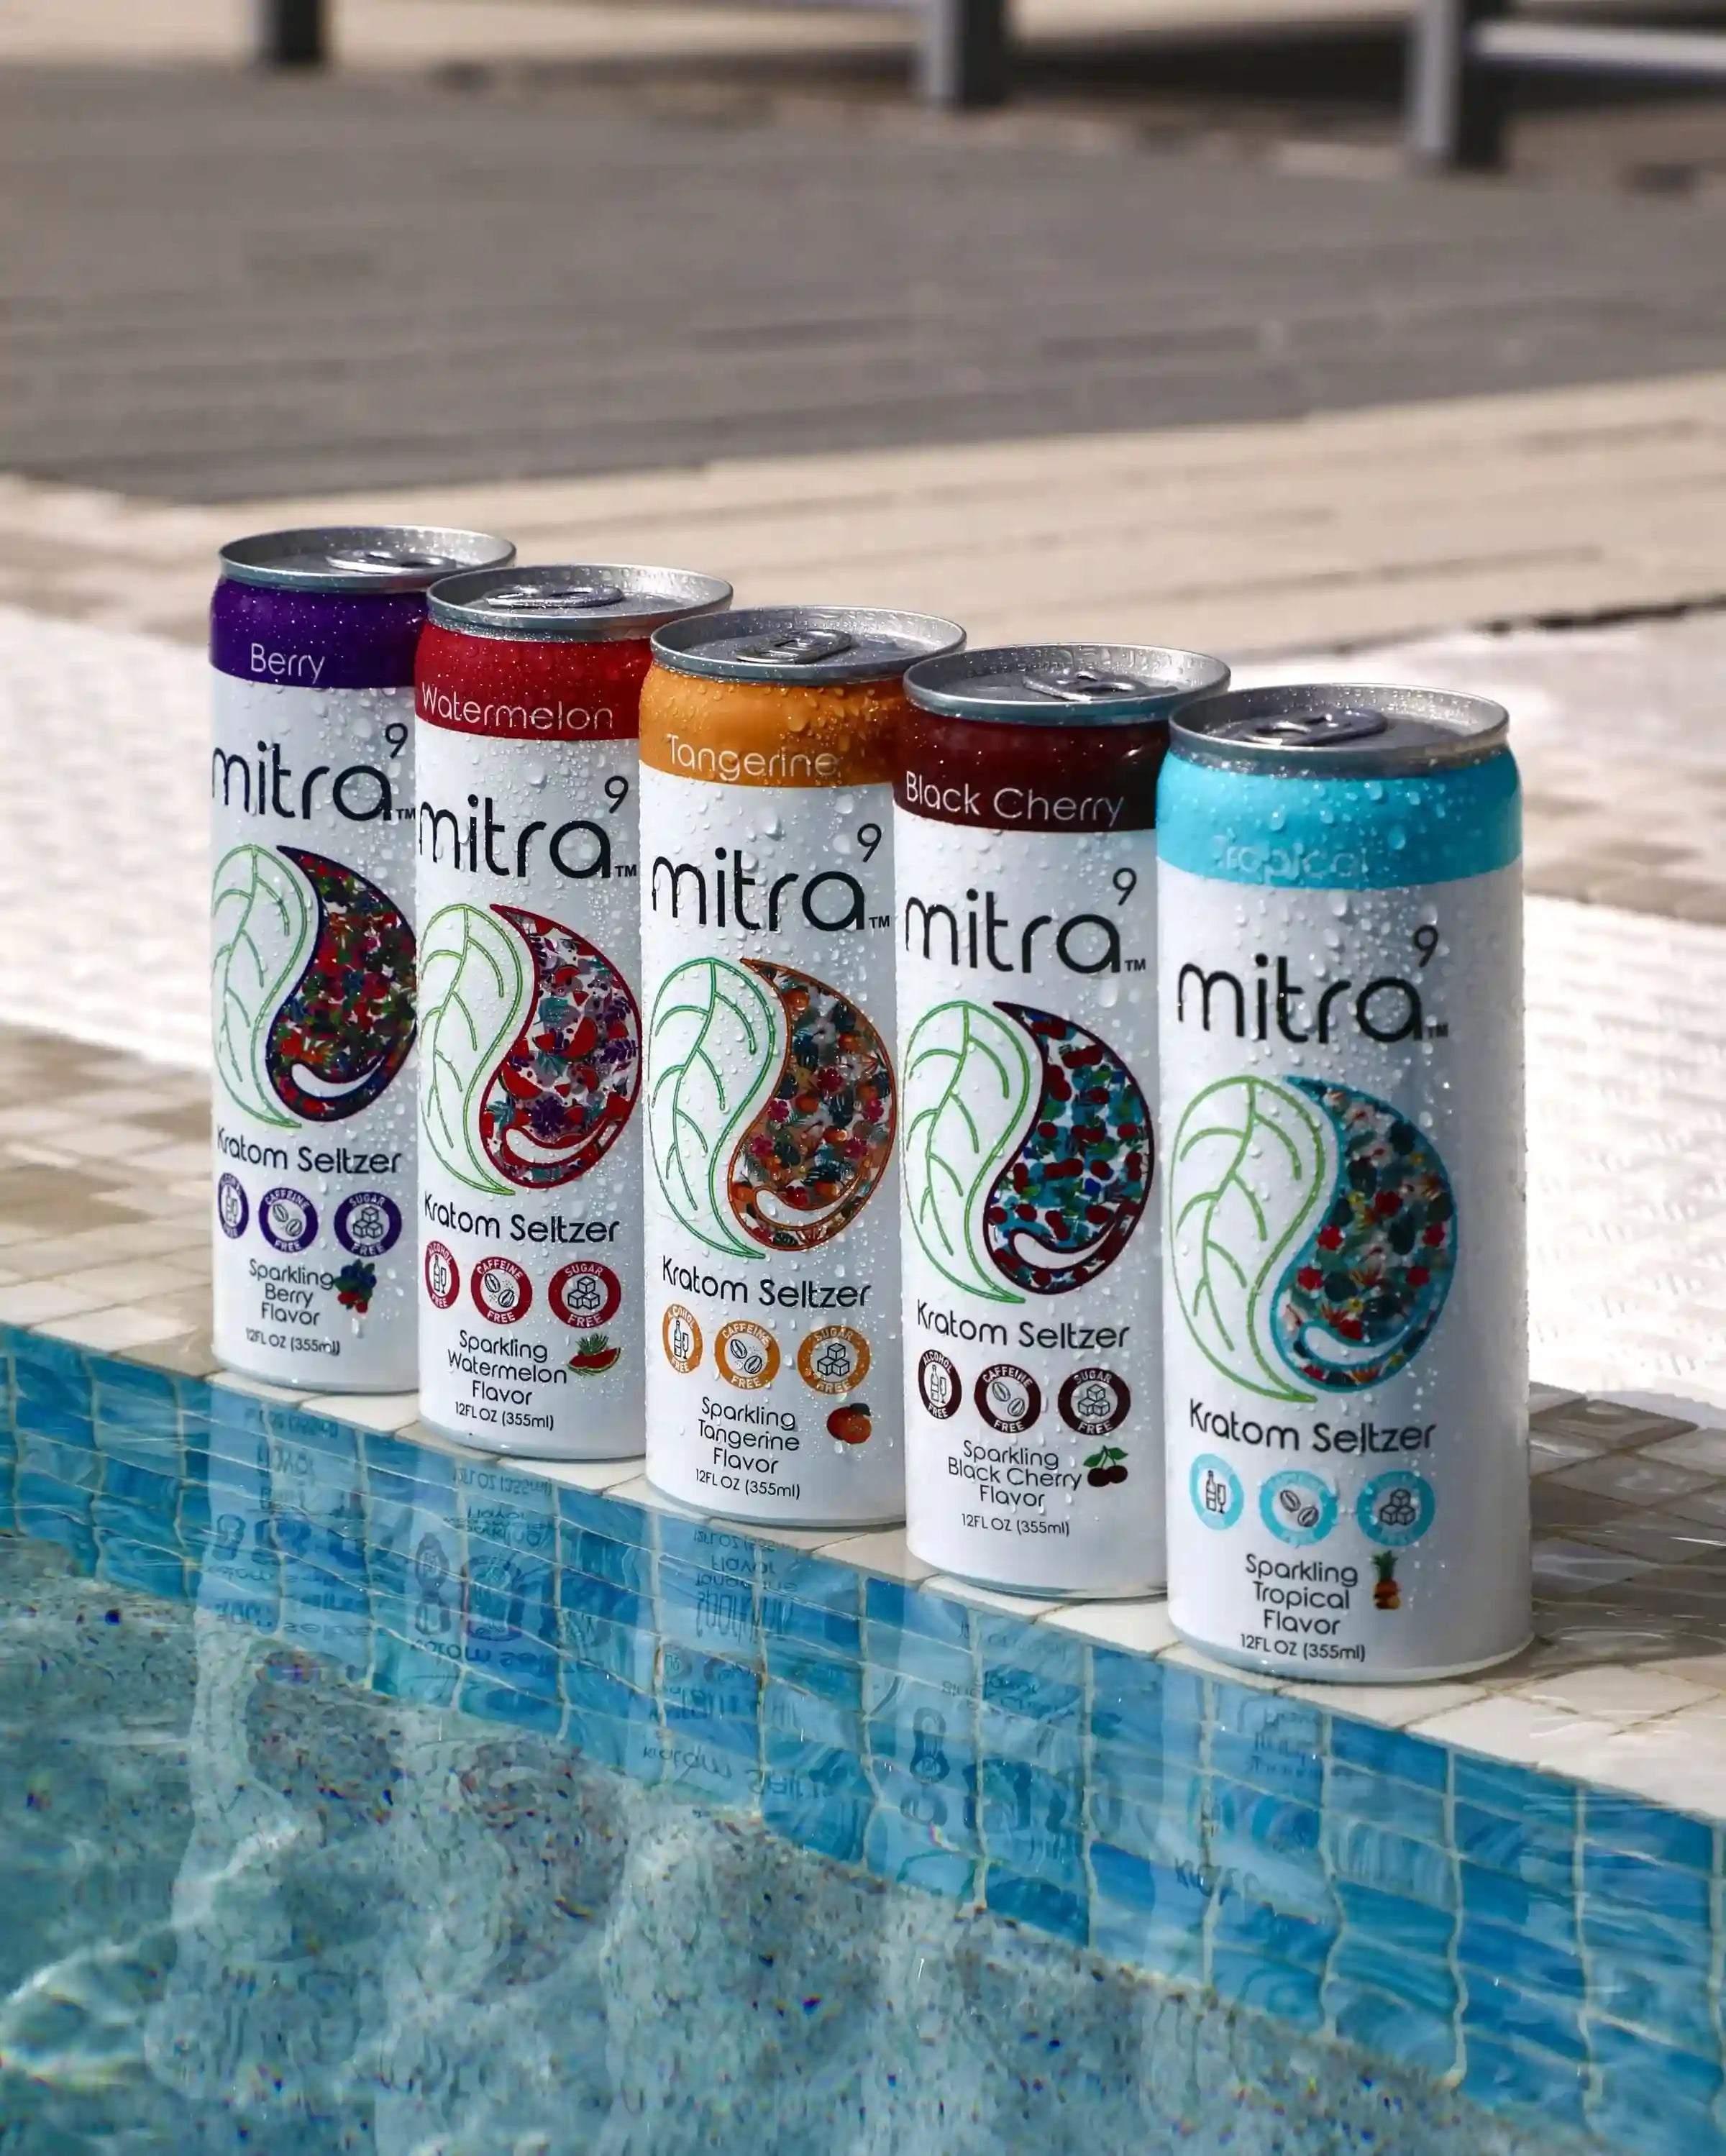 Mitra9 kratom drink seltzer by pool variety flavors